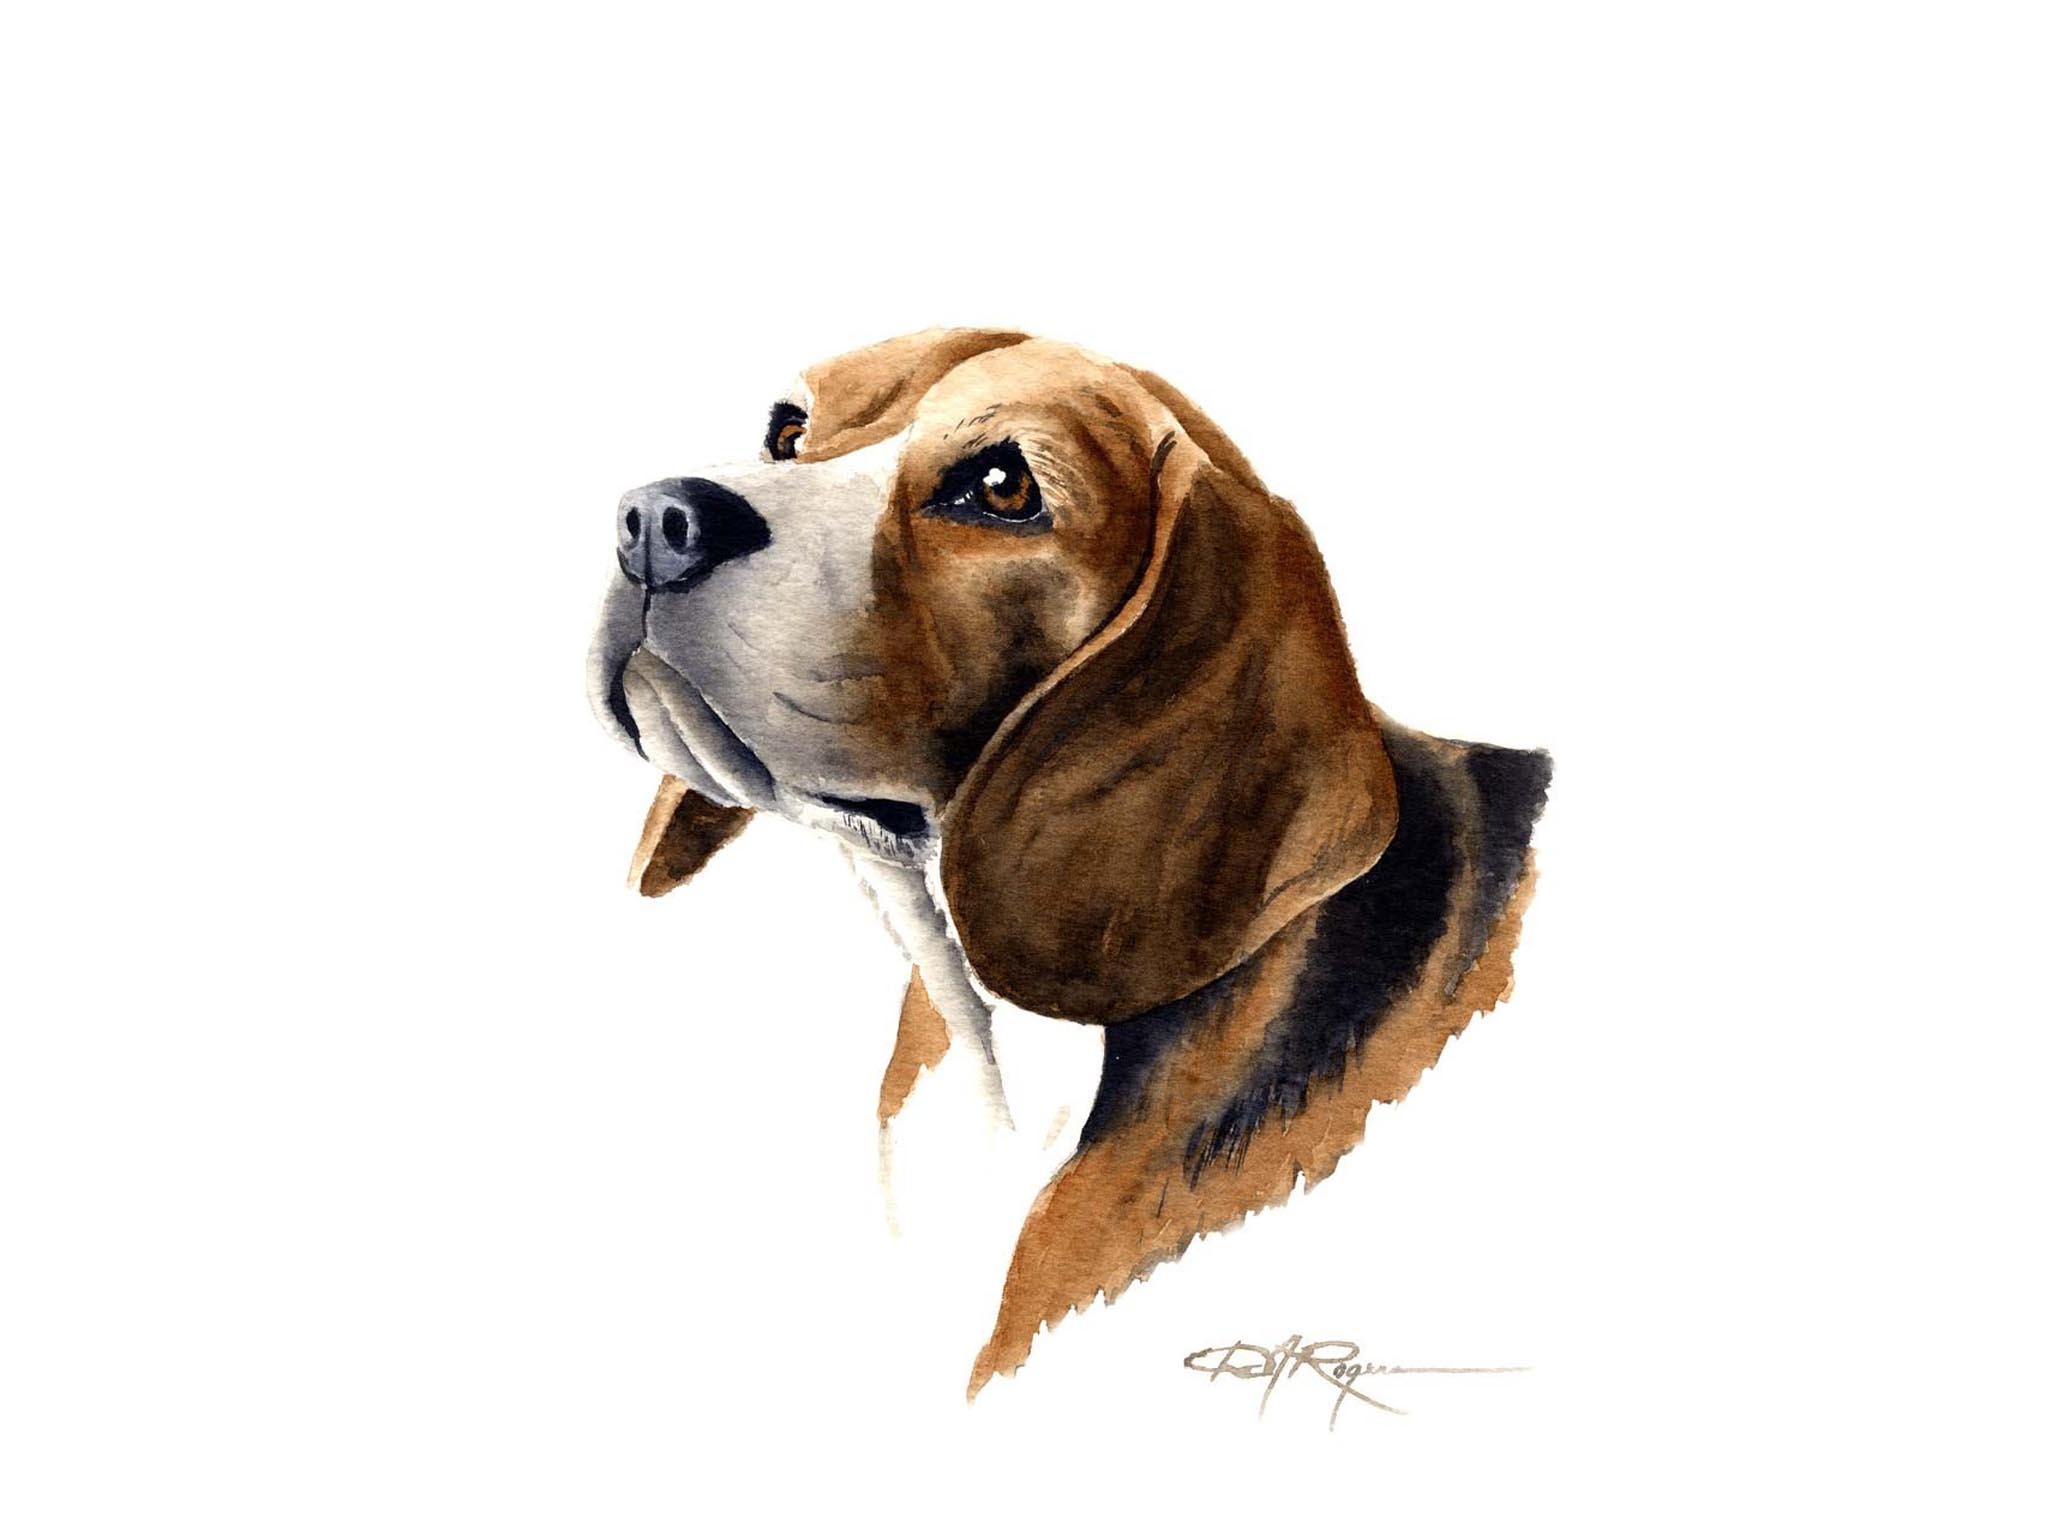 Beagle Dog Wallpaper